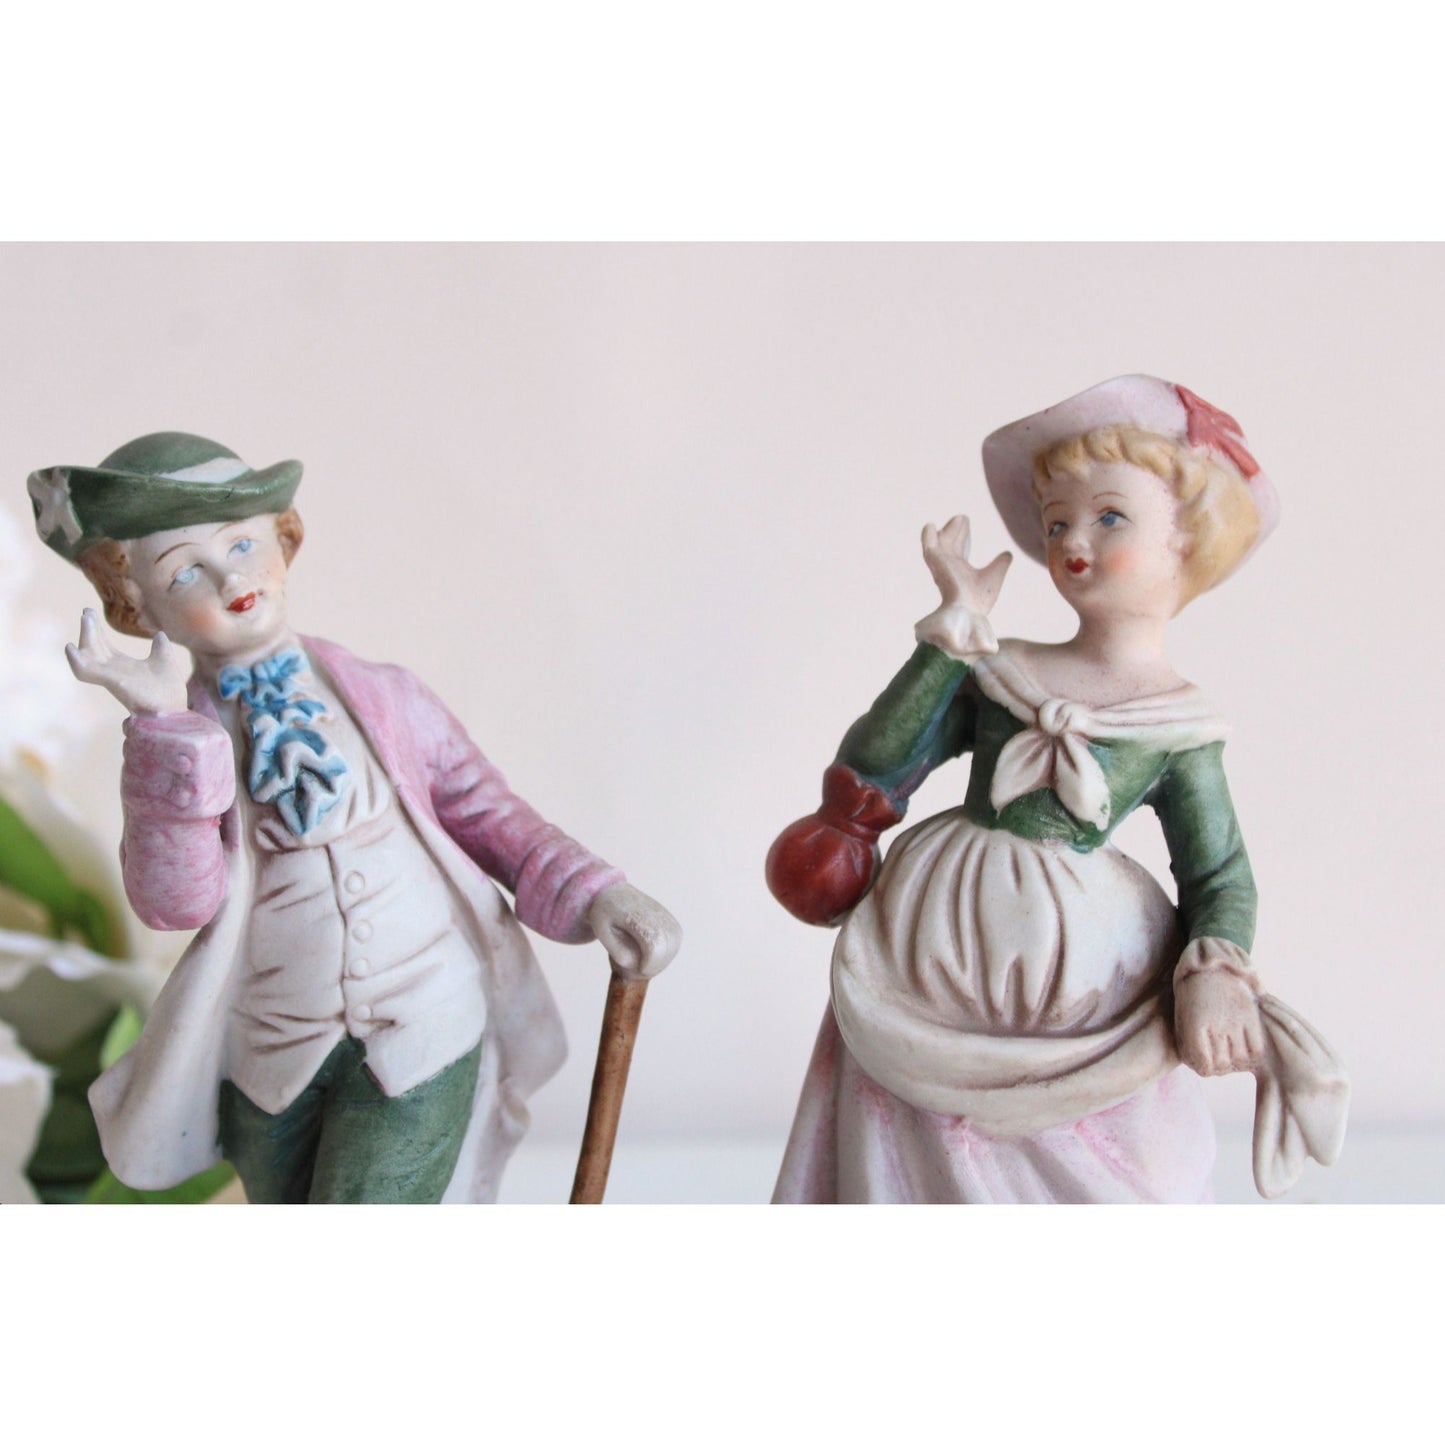 Vintage Bisque Porcelain Man and Woman Figurines